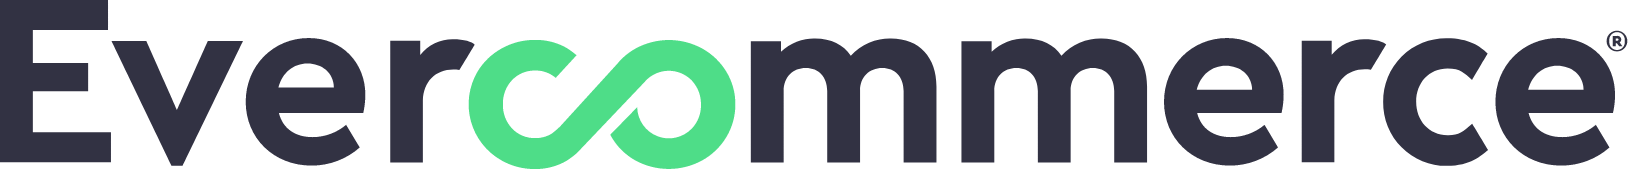 EverCommerce logo large (transparent PNG)